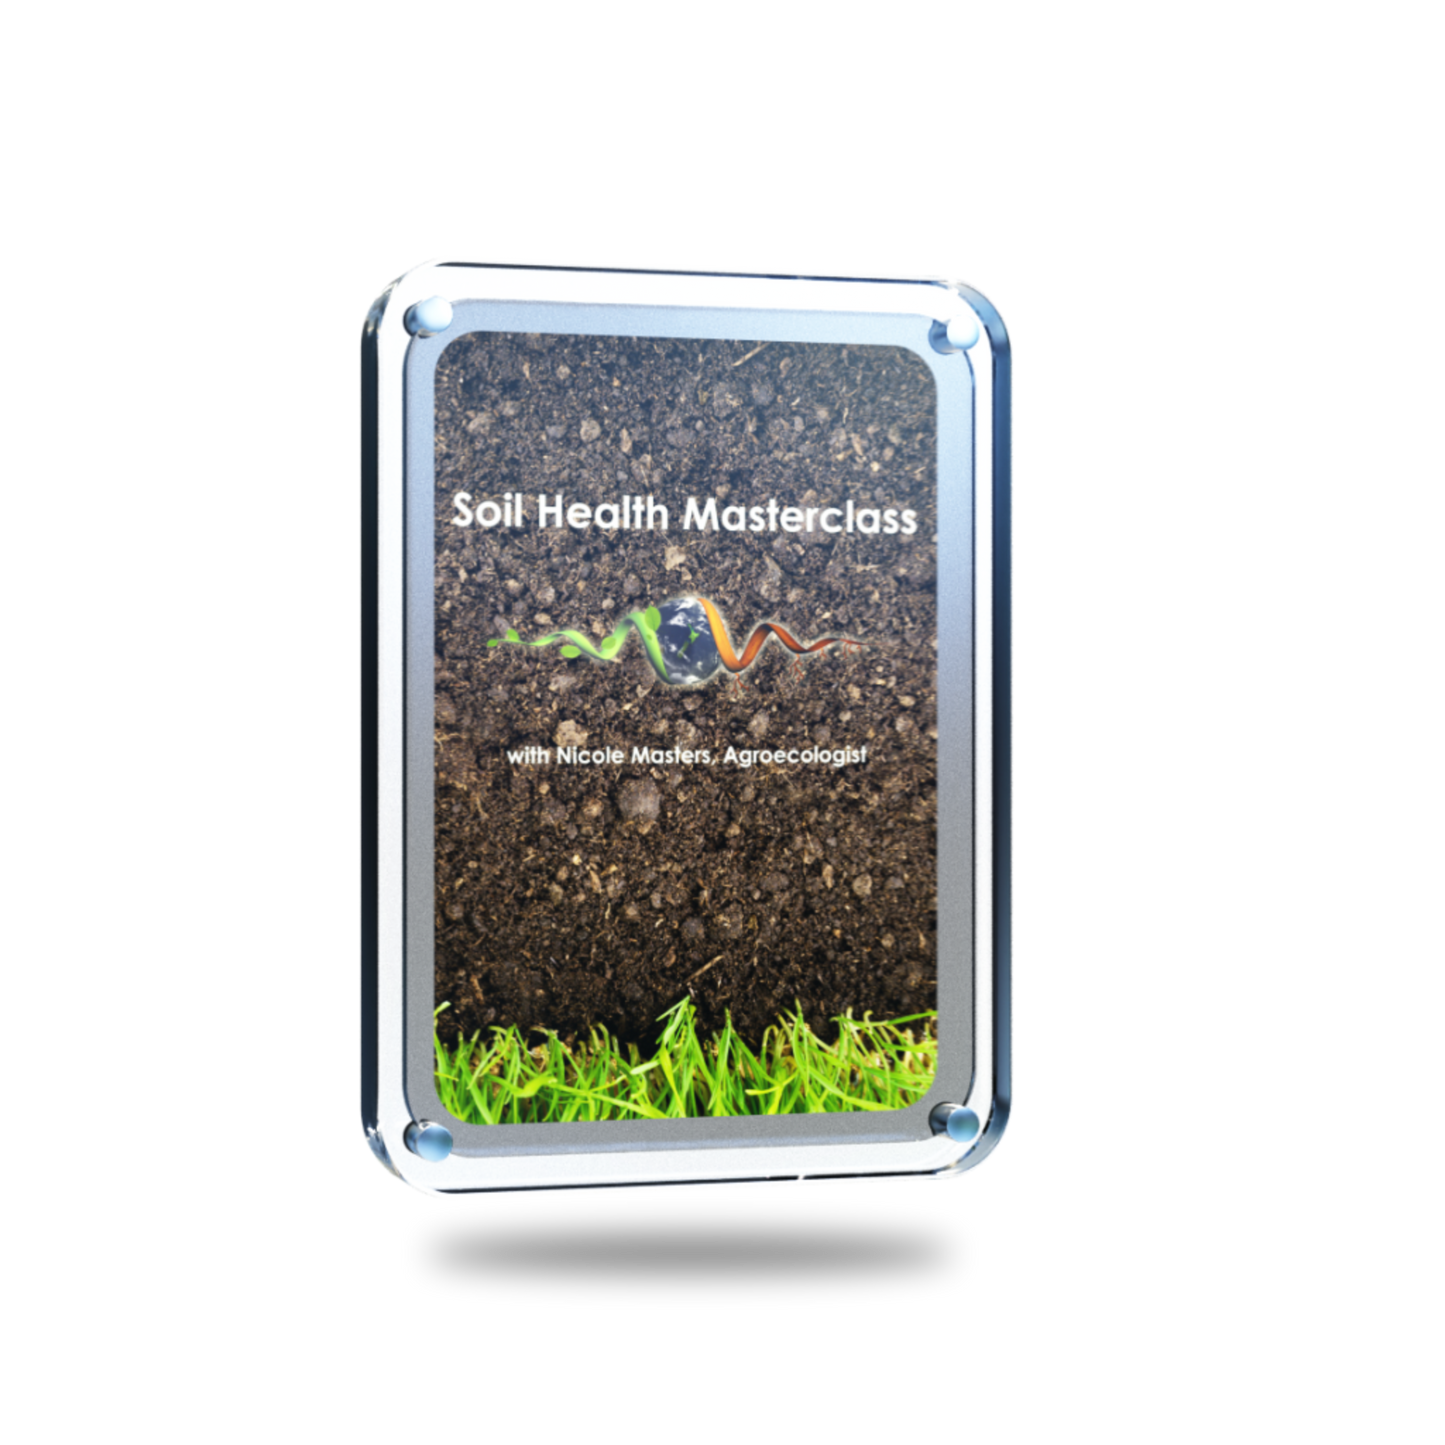 Soil Health Masterclass